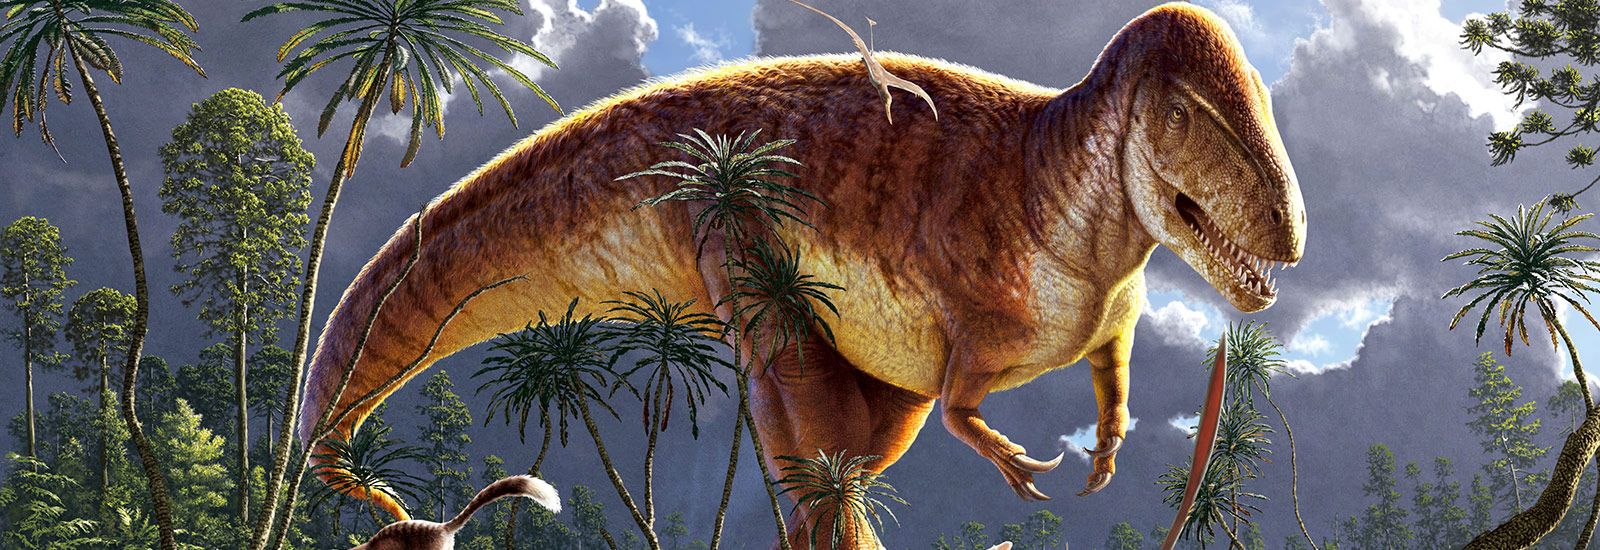 Artist's impression of a Megalosaurus